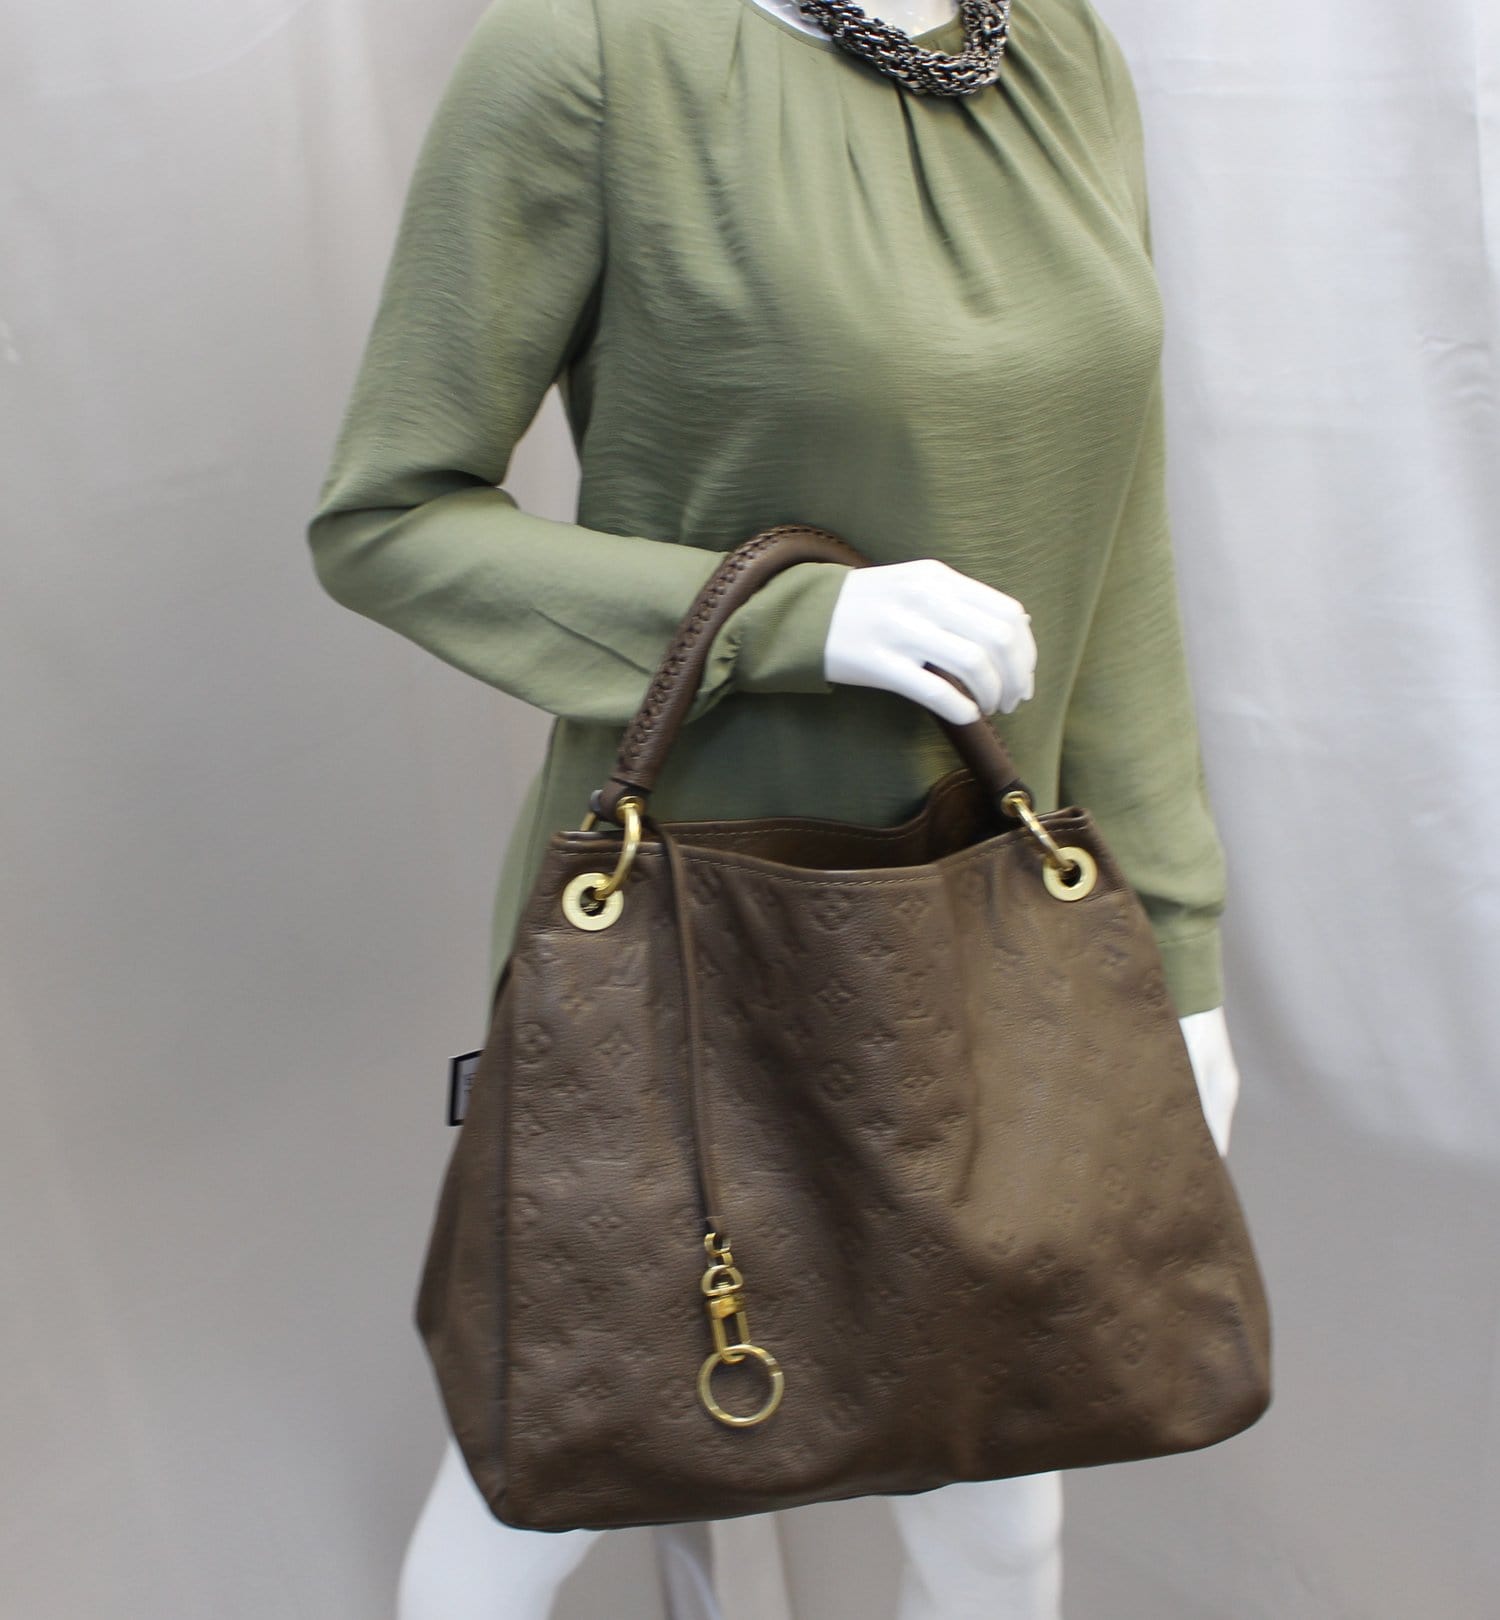 Louis Vuitton Artsy Handbag Monogram Empreinte Leather MM at